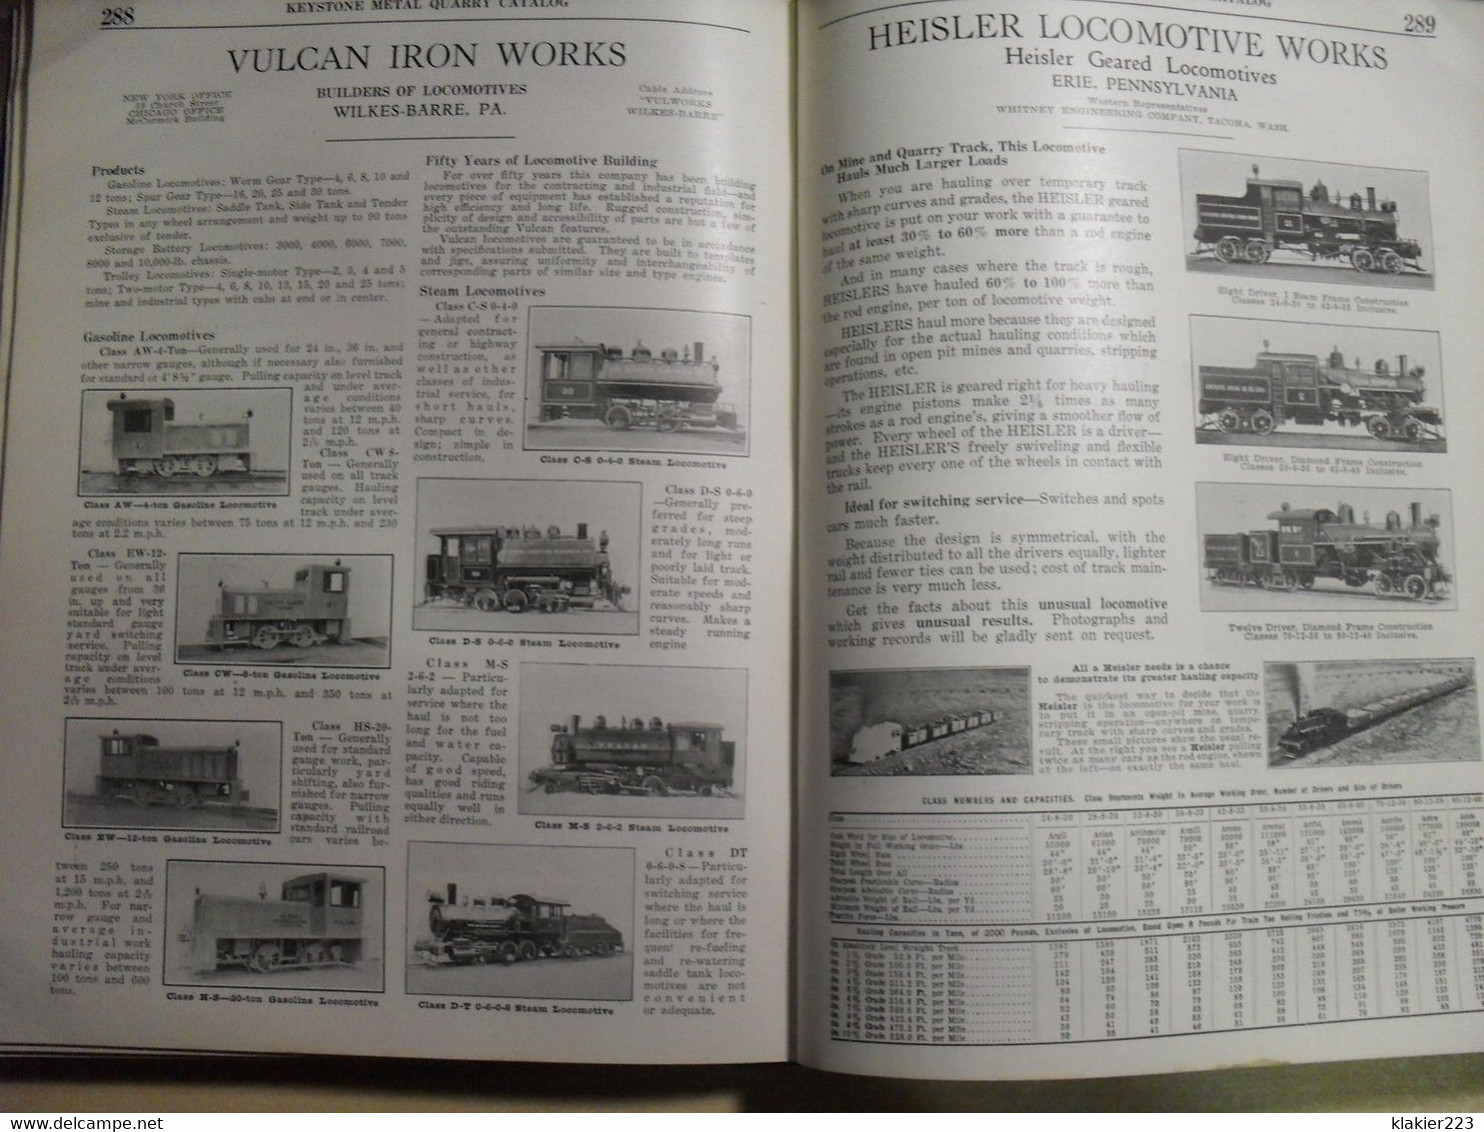 Keystone Metal Quarry Catalog 1927 - Ingénierie